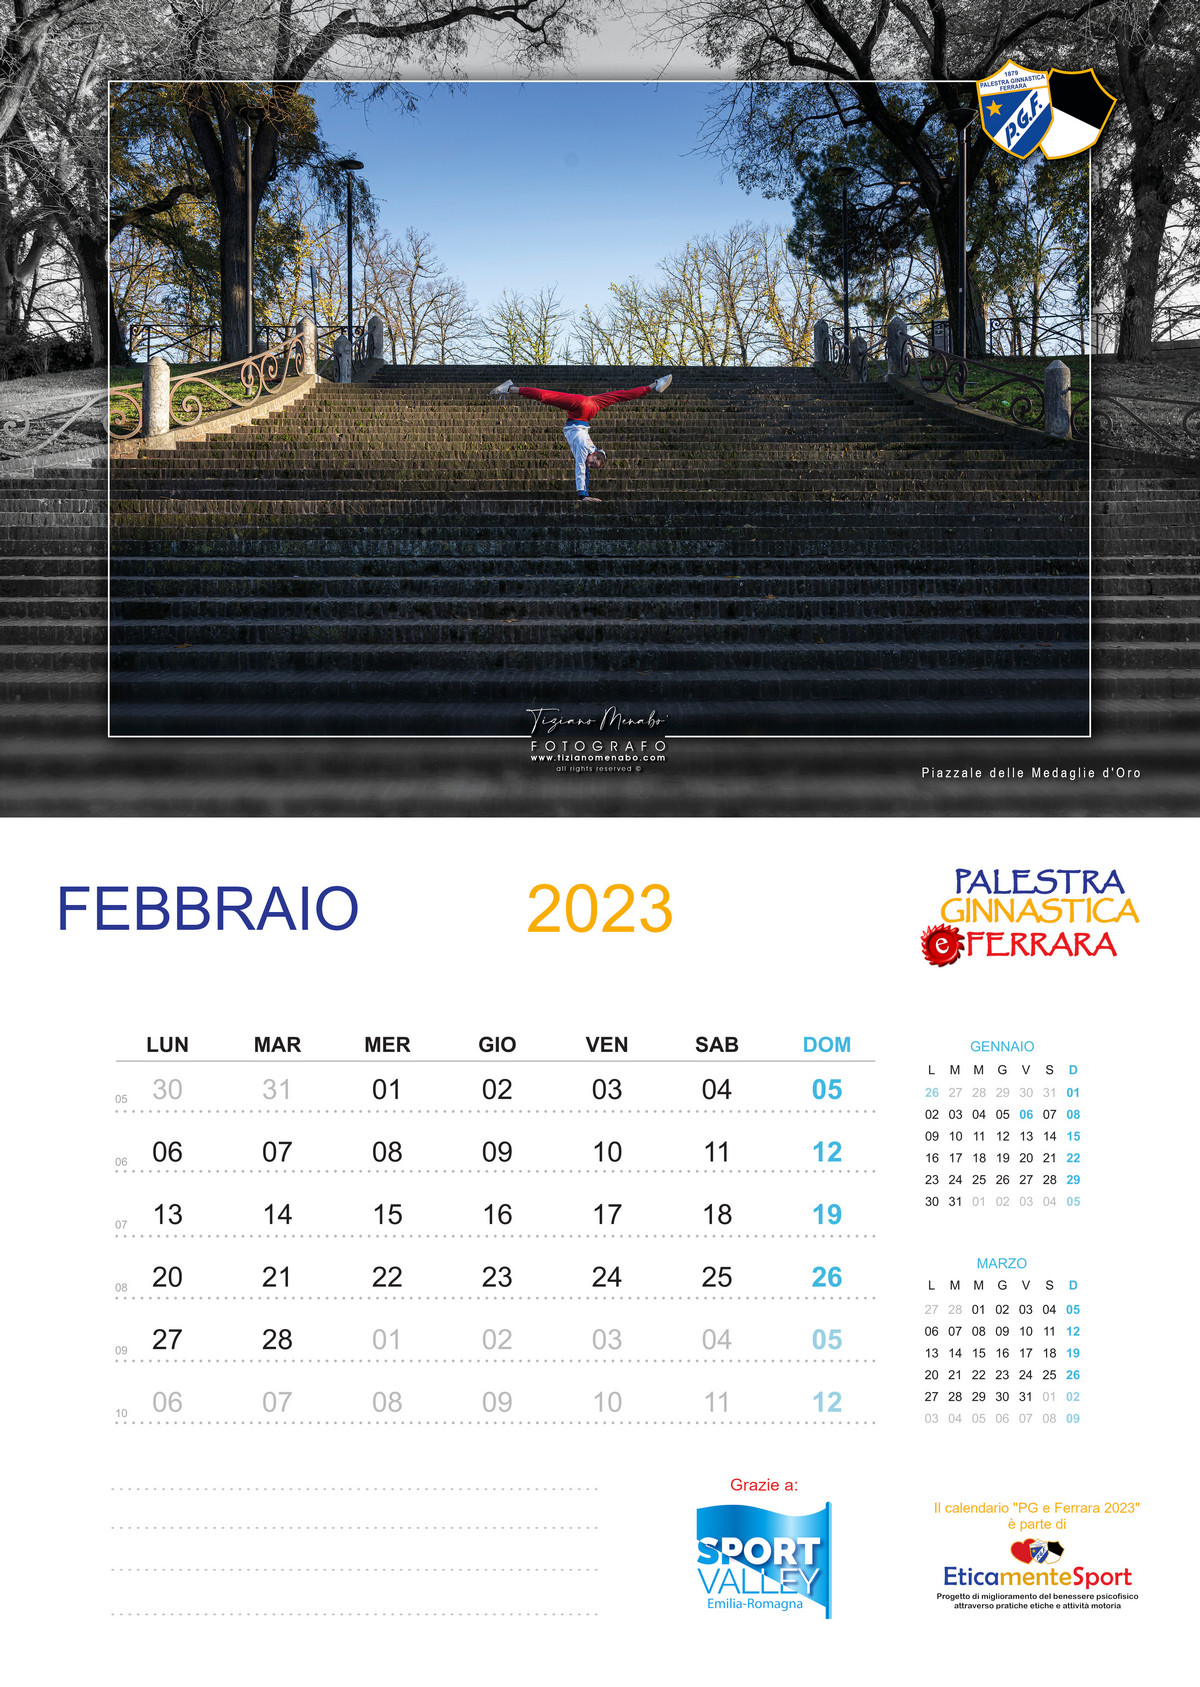 Calendario PG e Ferrara 2023-Palestra Ginnastica Ferrara a.s.d.